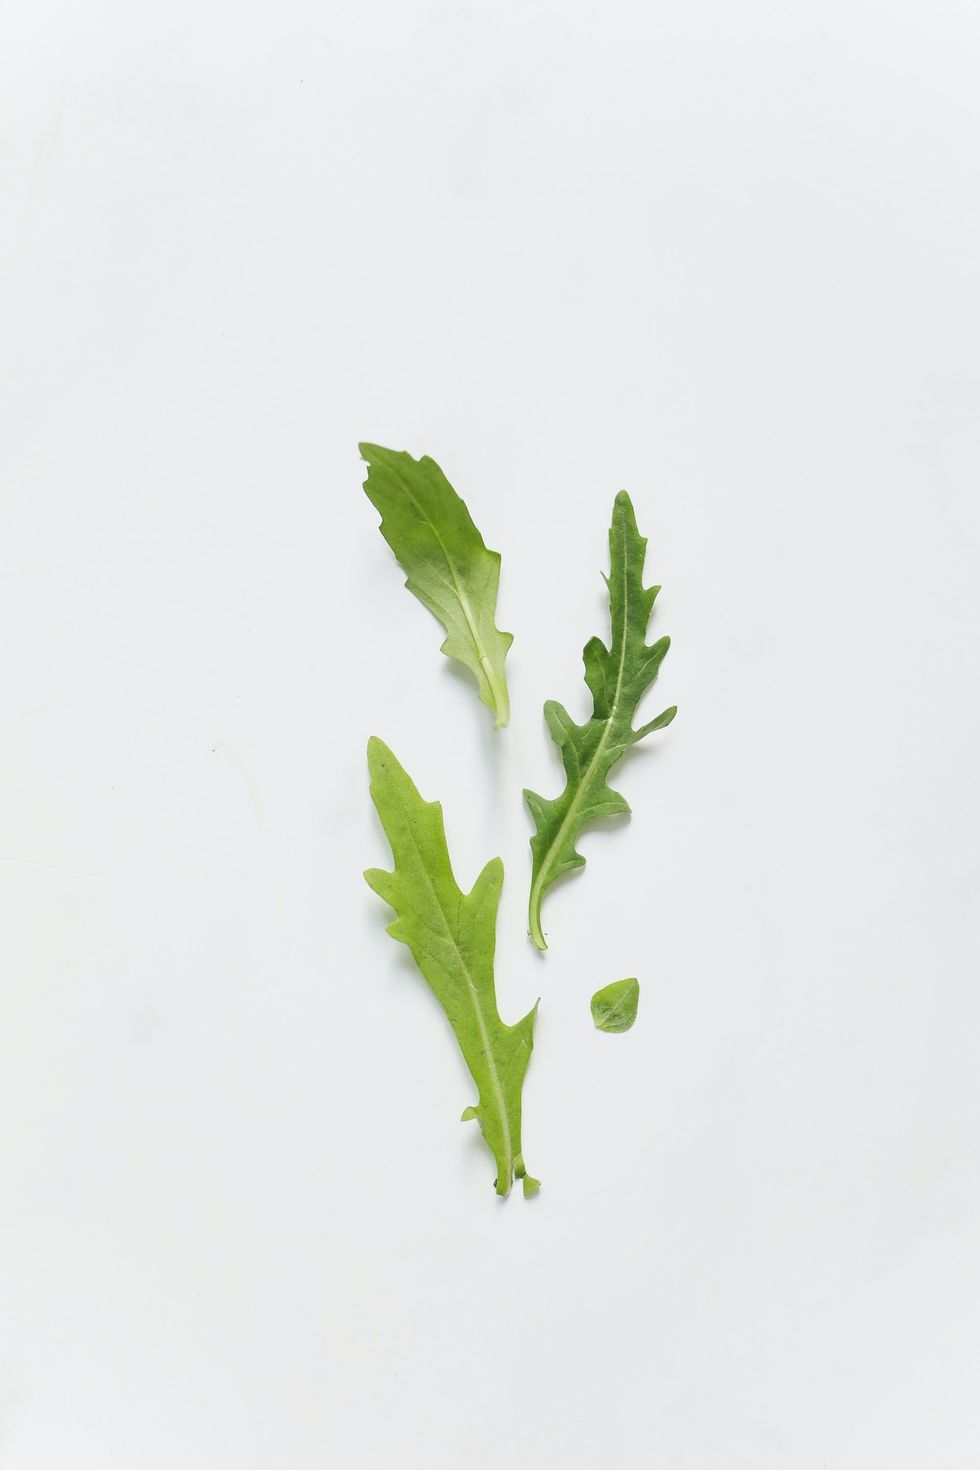 arugula leaves against a white background